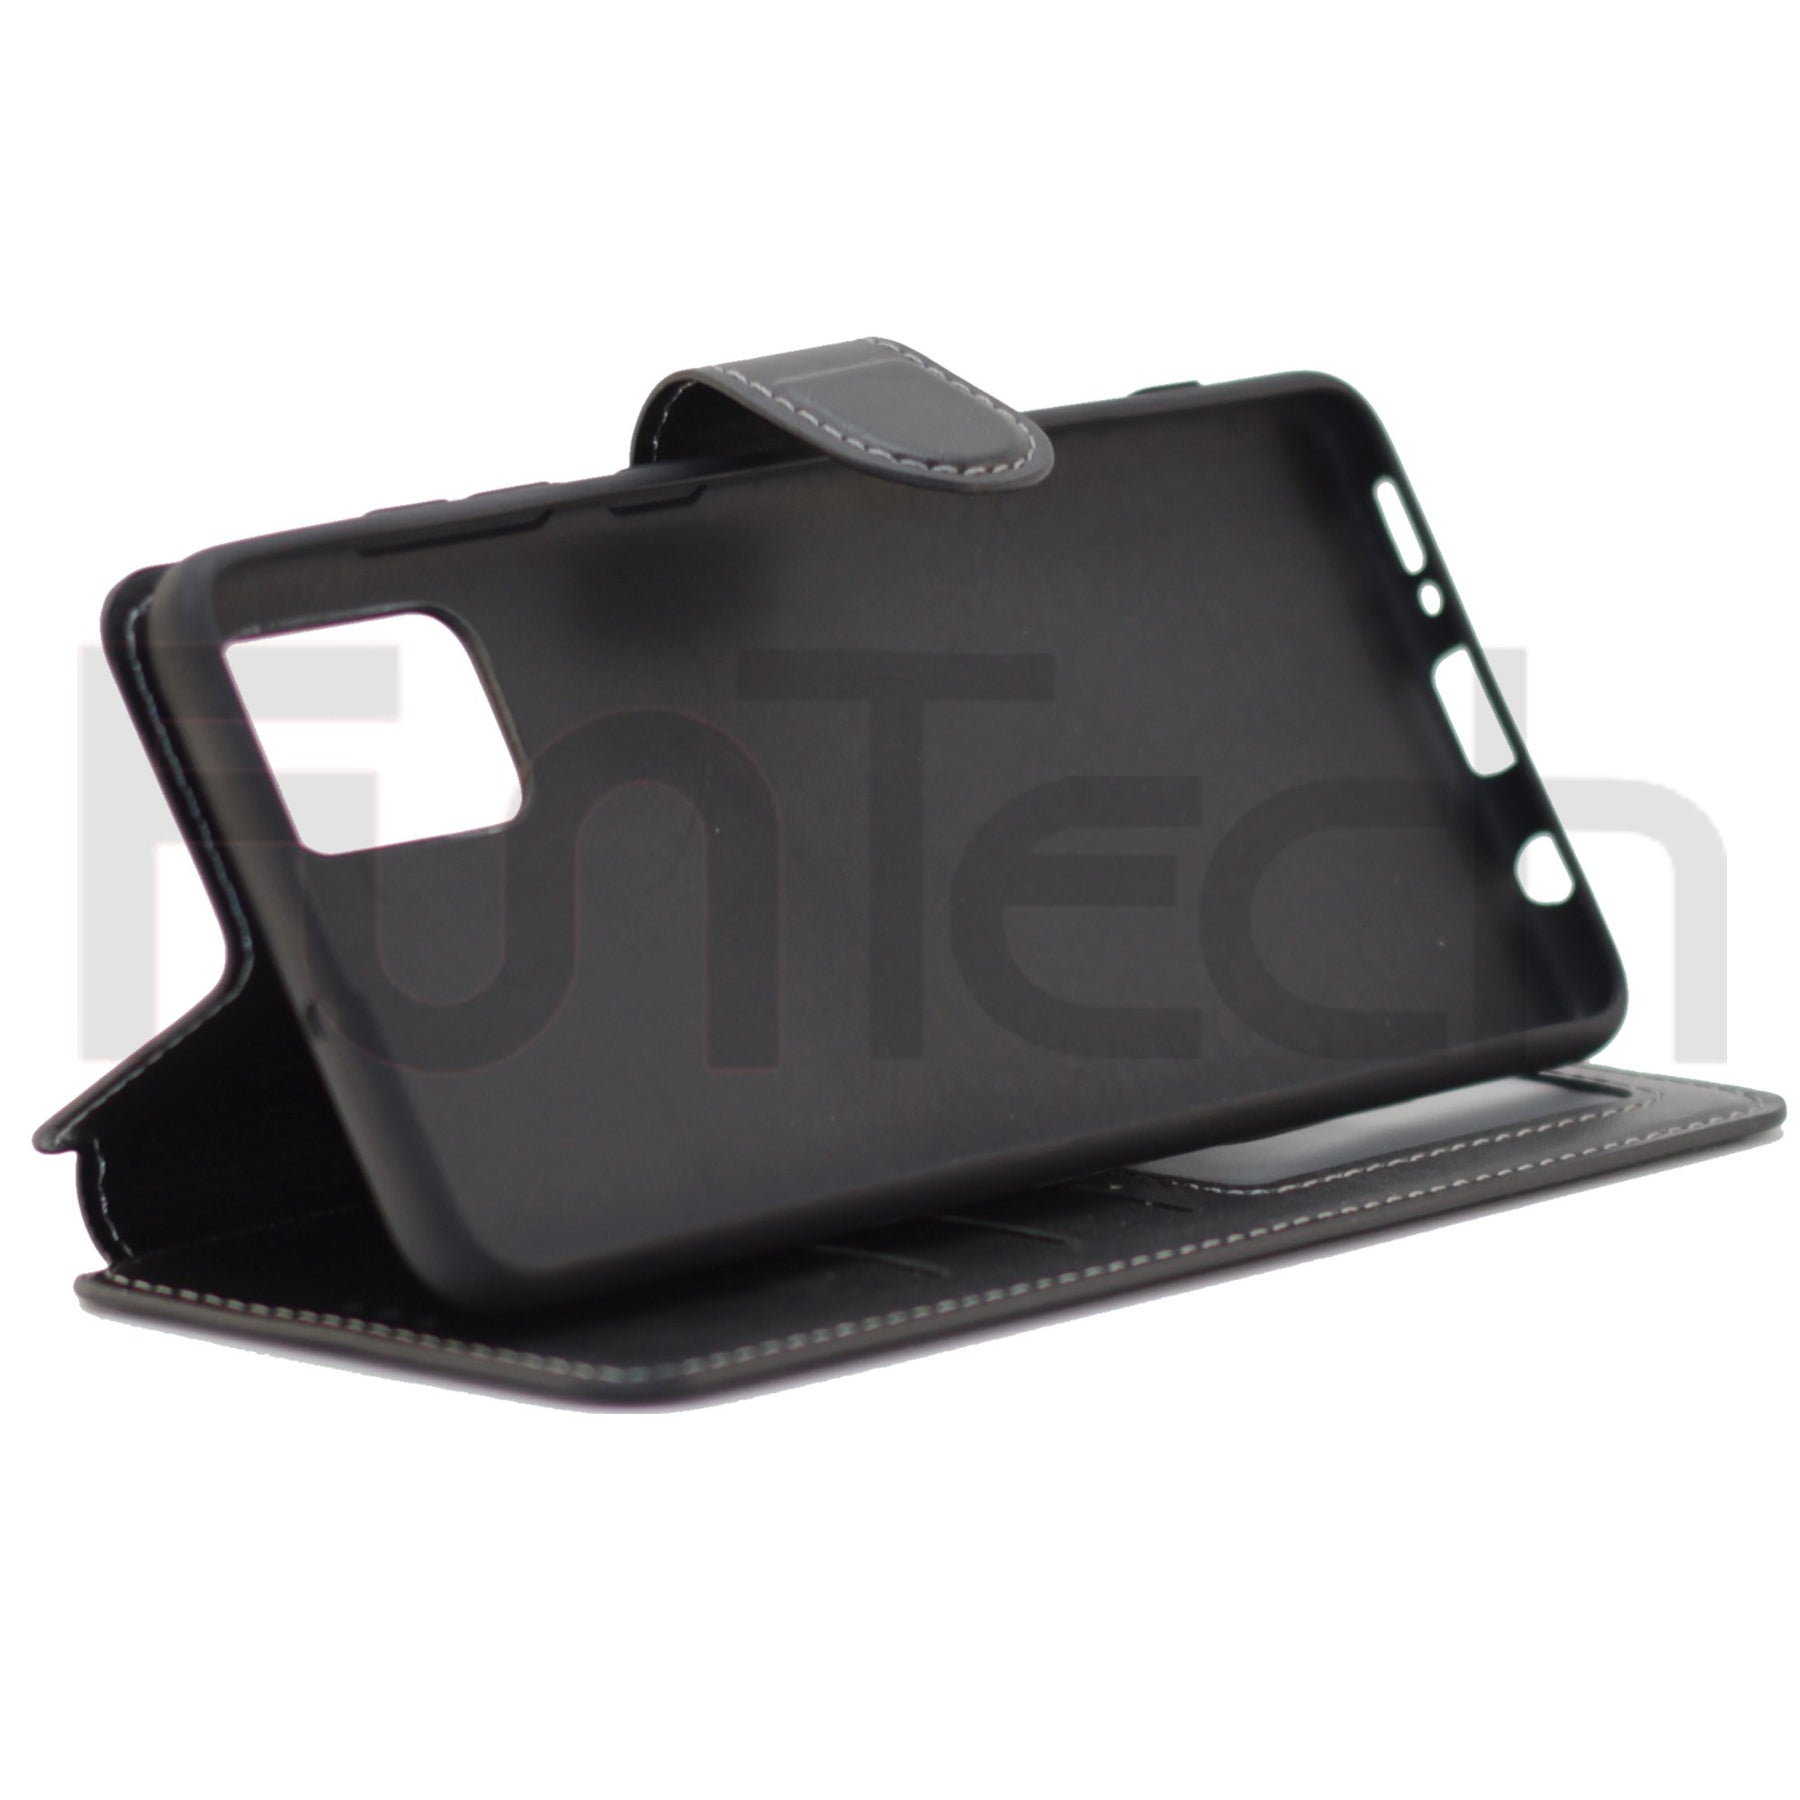 Samsung A51 Leather Wallet Case Color Black